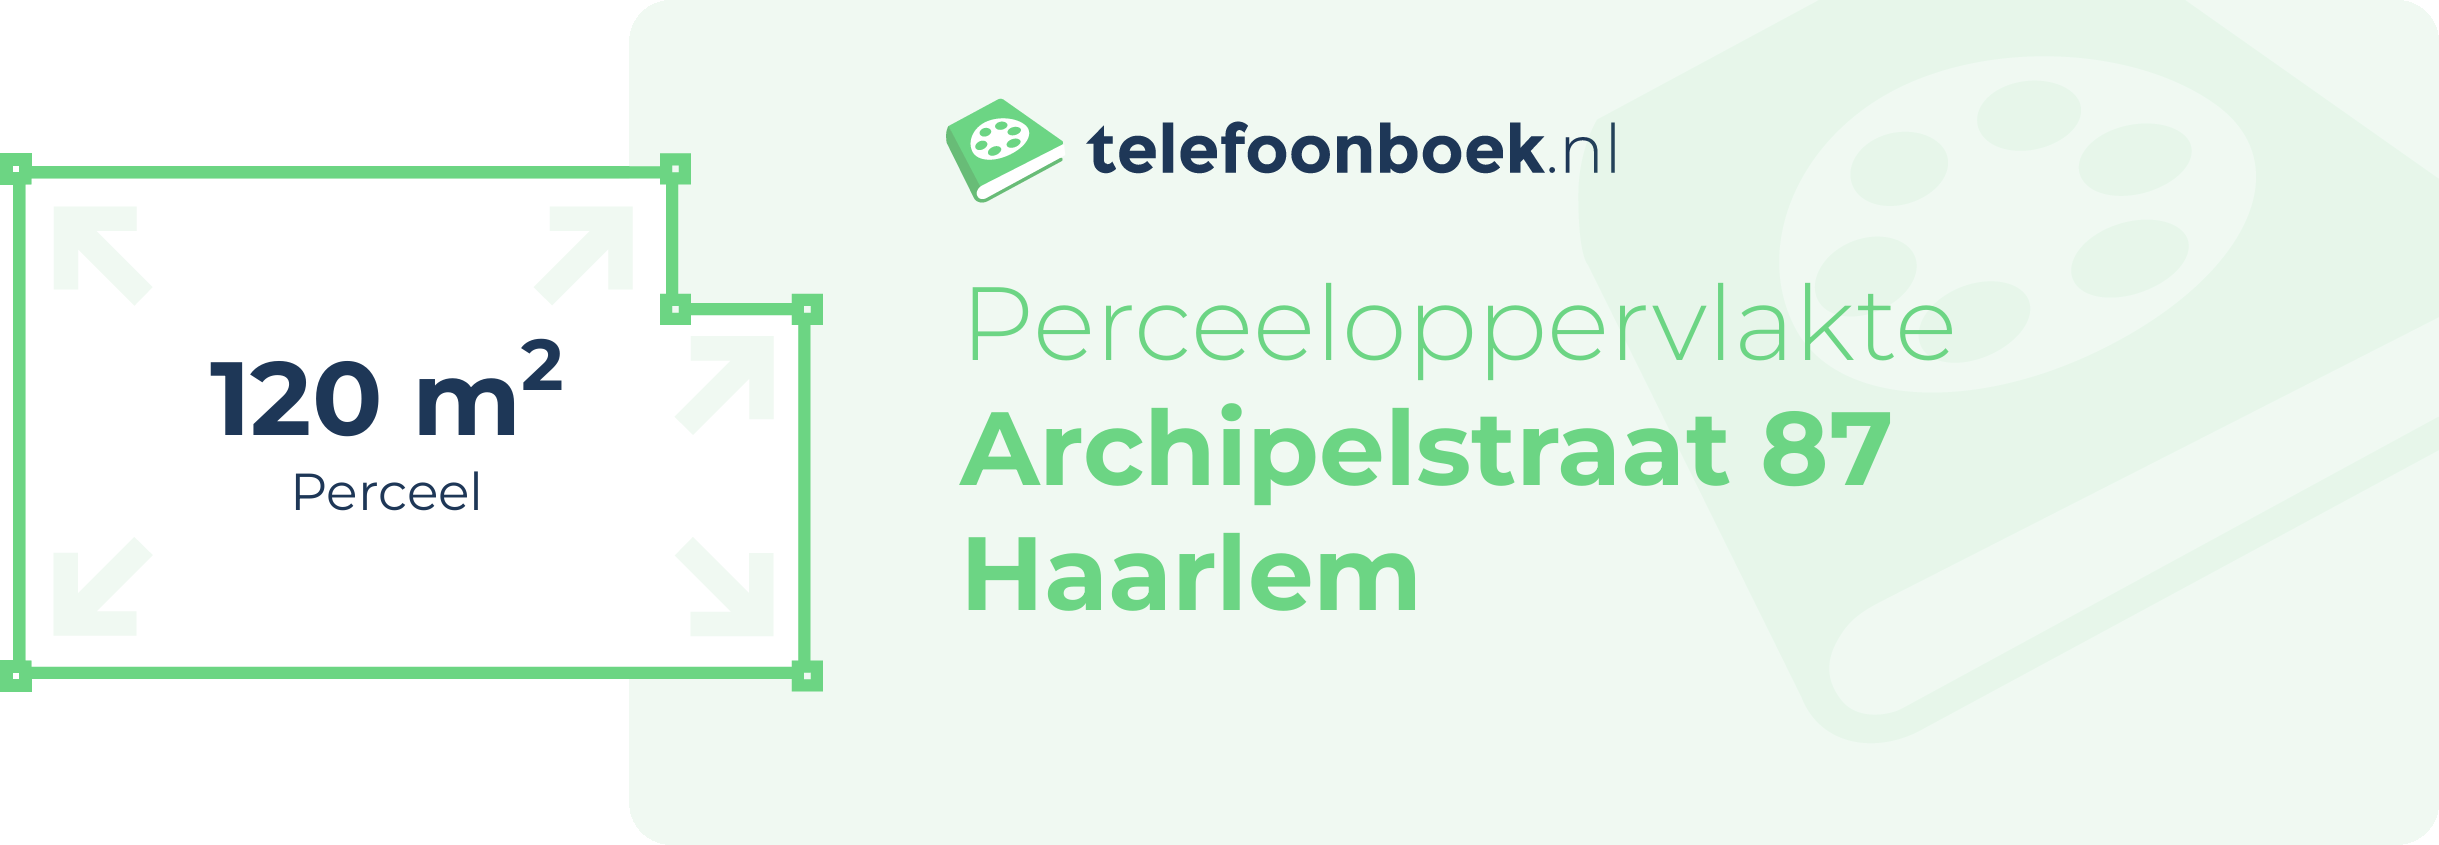 Perceeloppervlakte Archipelstraat 87 Haarlem